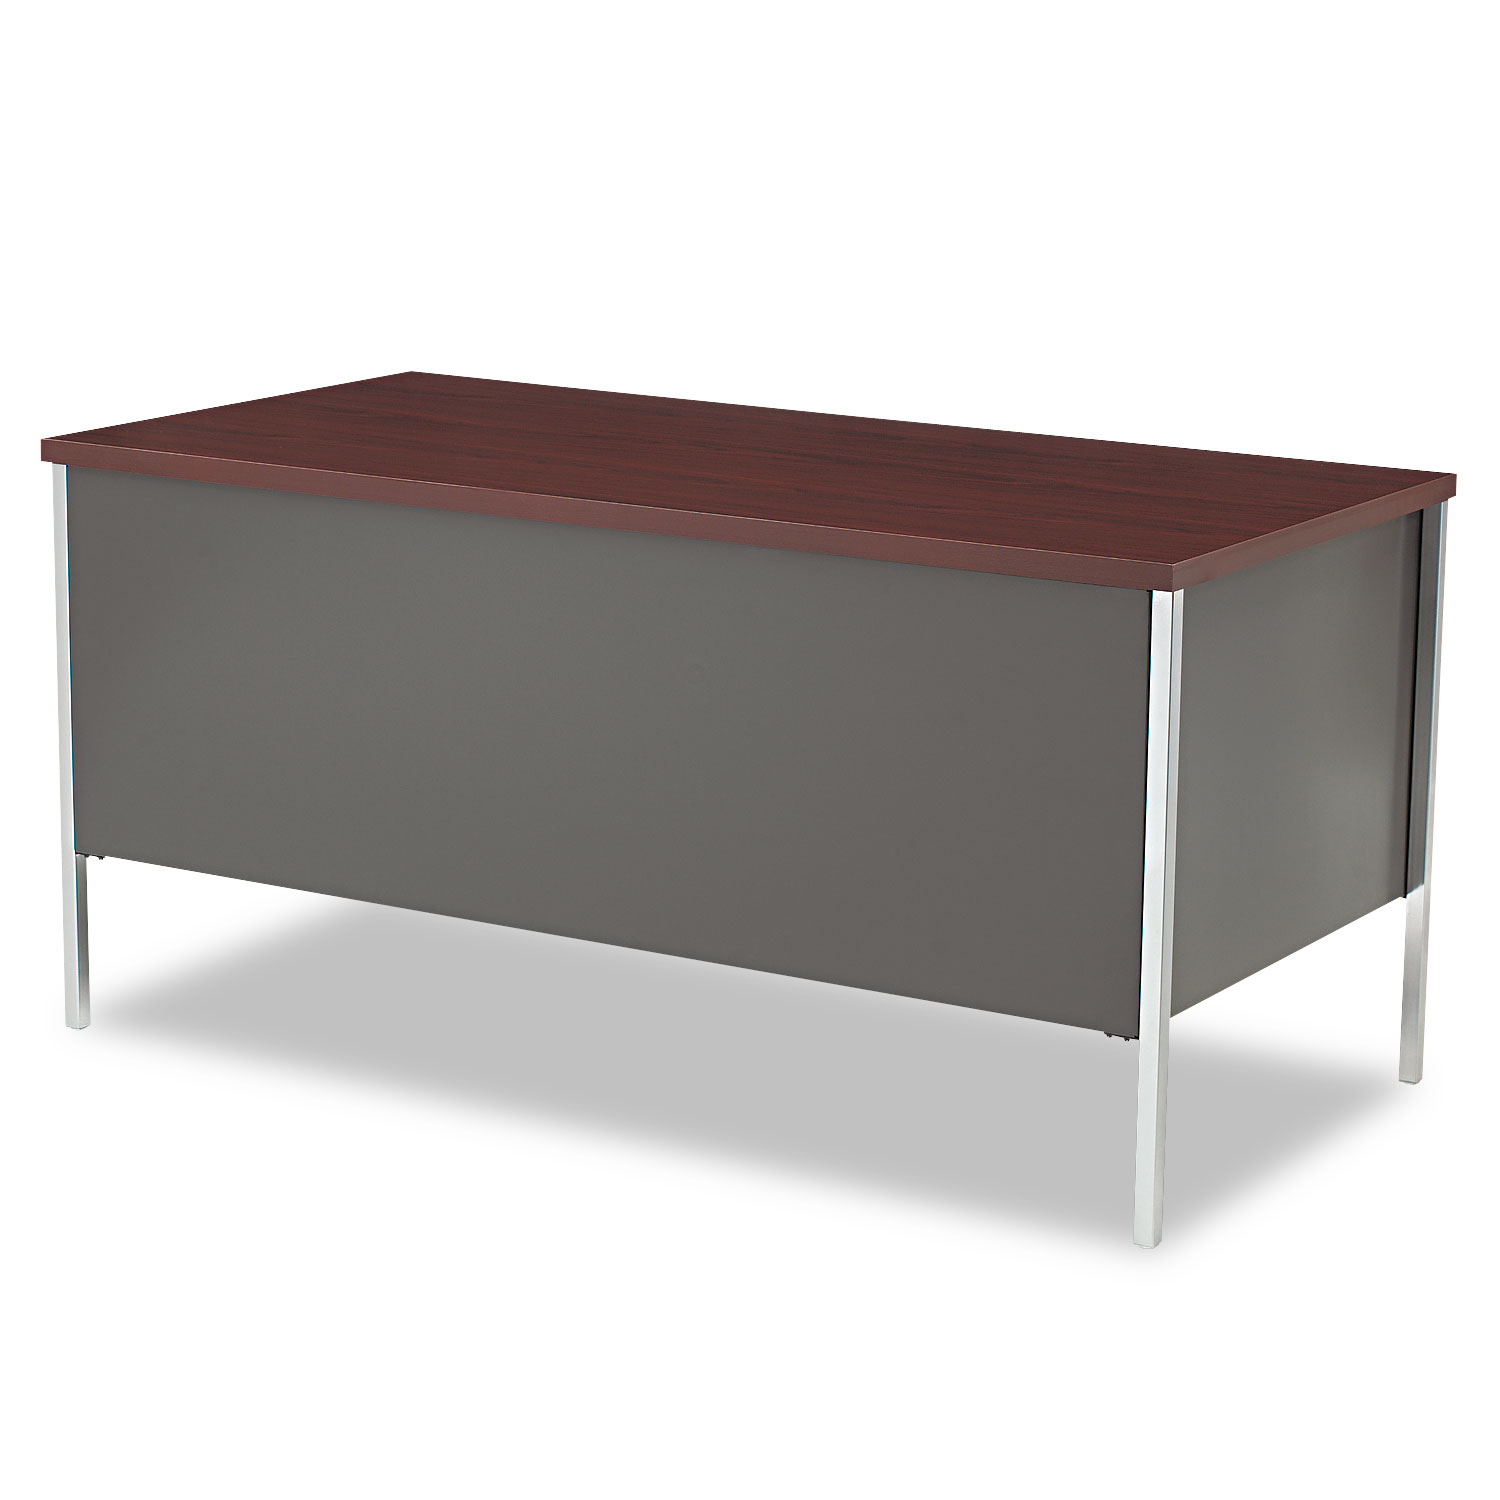 34000 Series Double Pedestal Desk, 60w x 30d x 29 1/2h, Mahogany/Charcoal